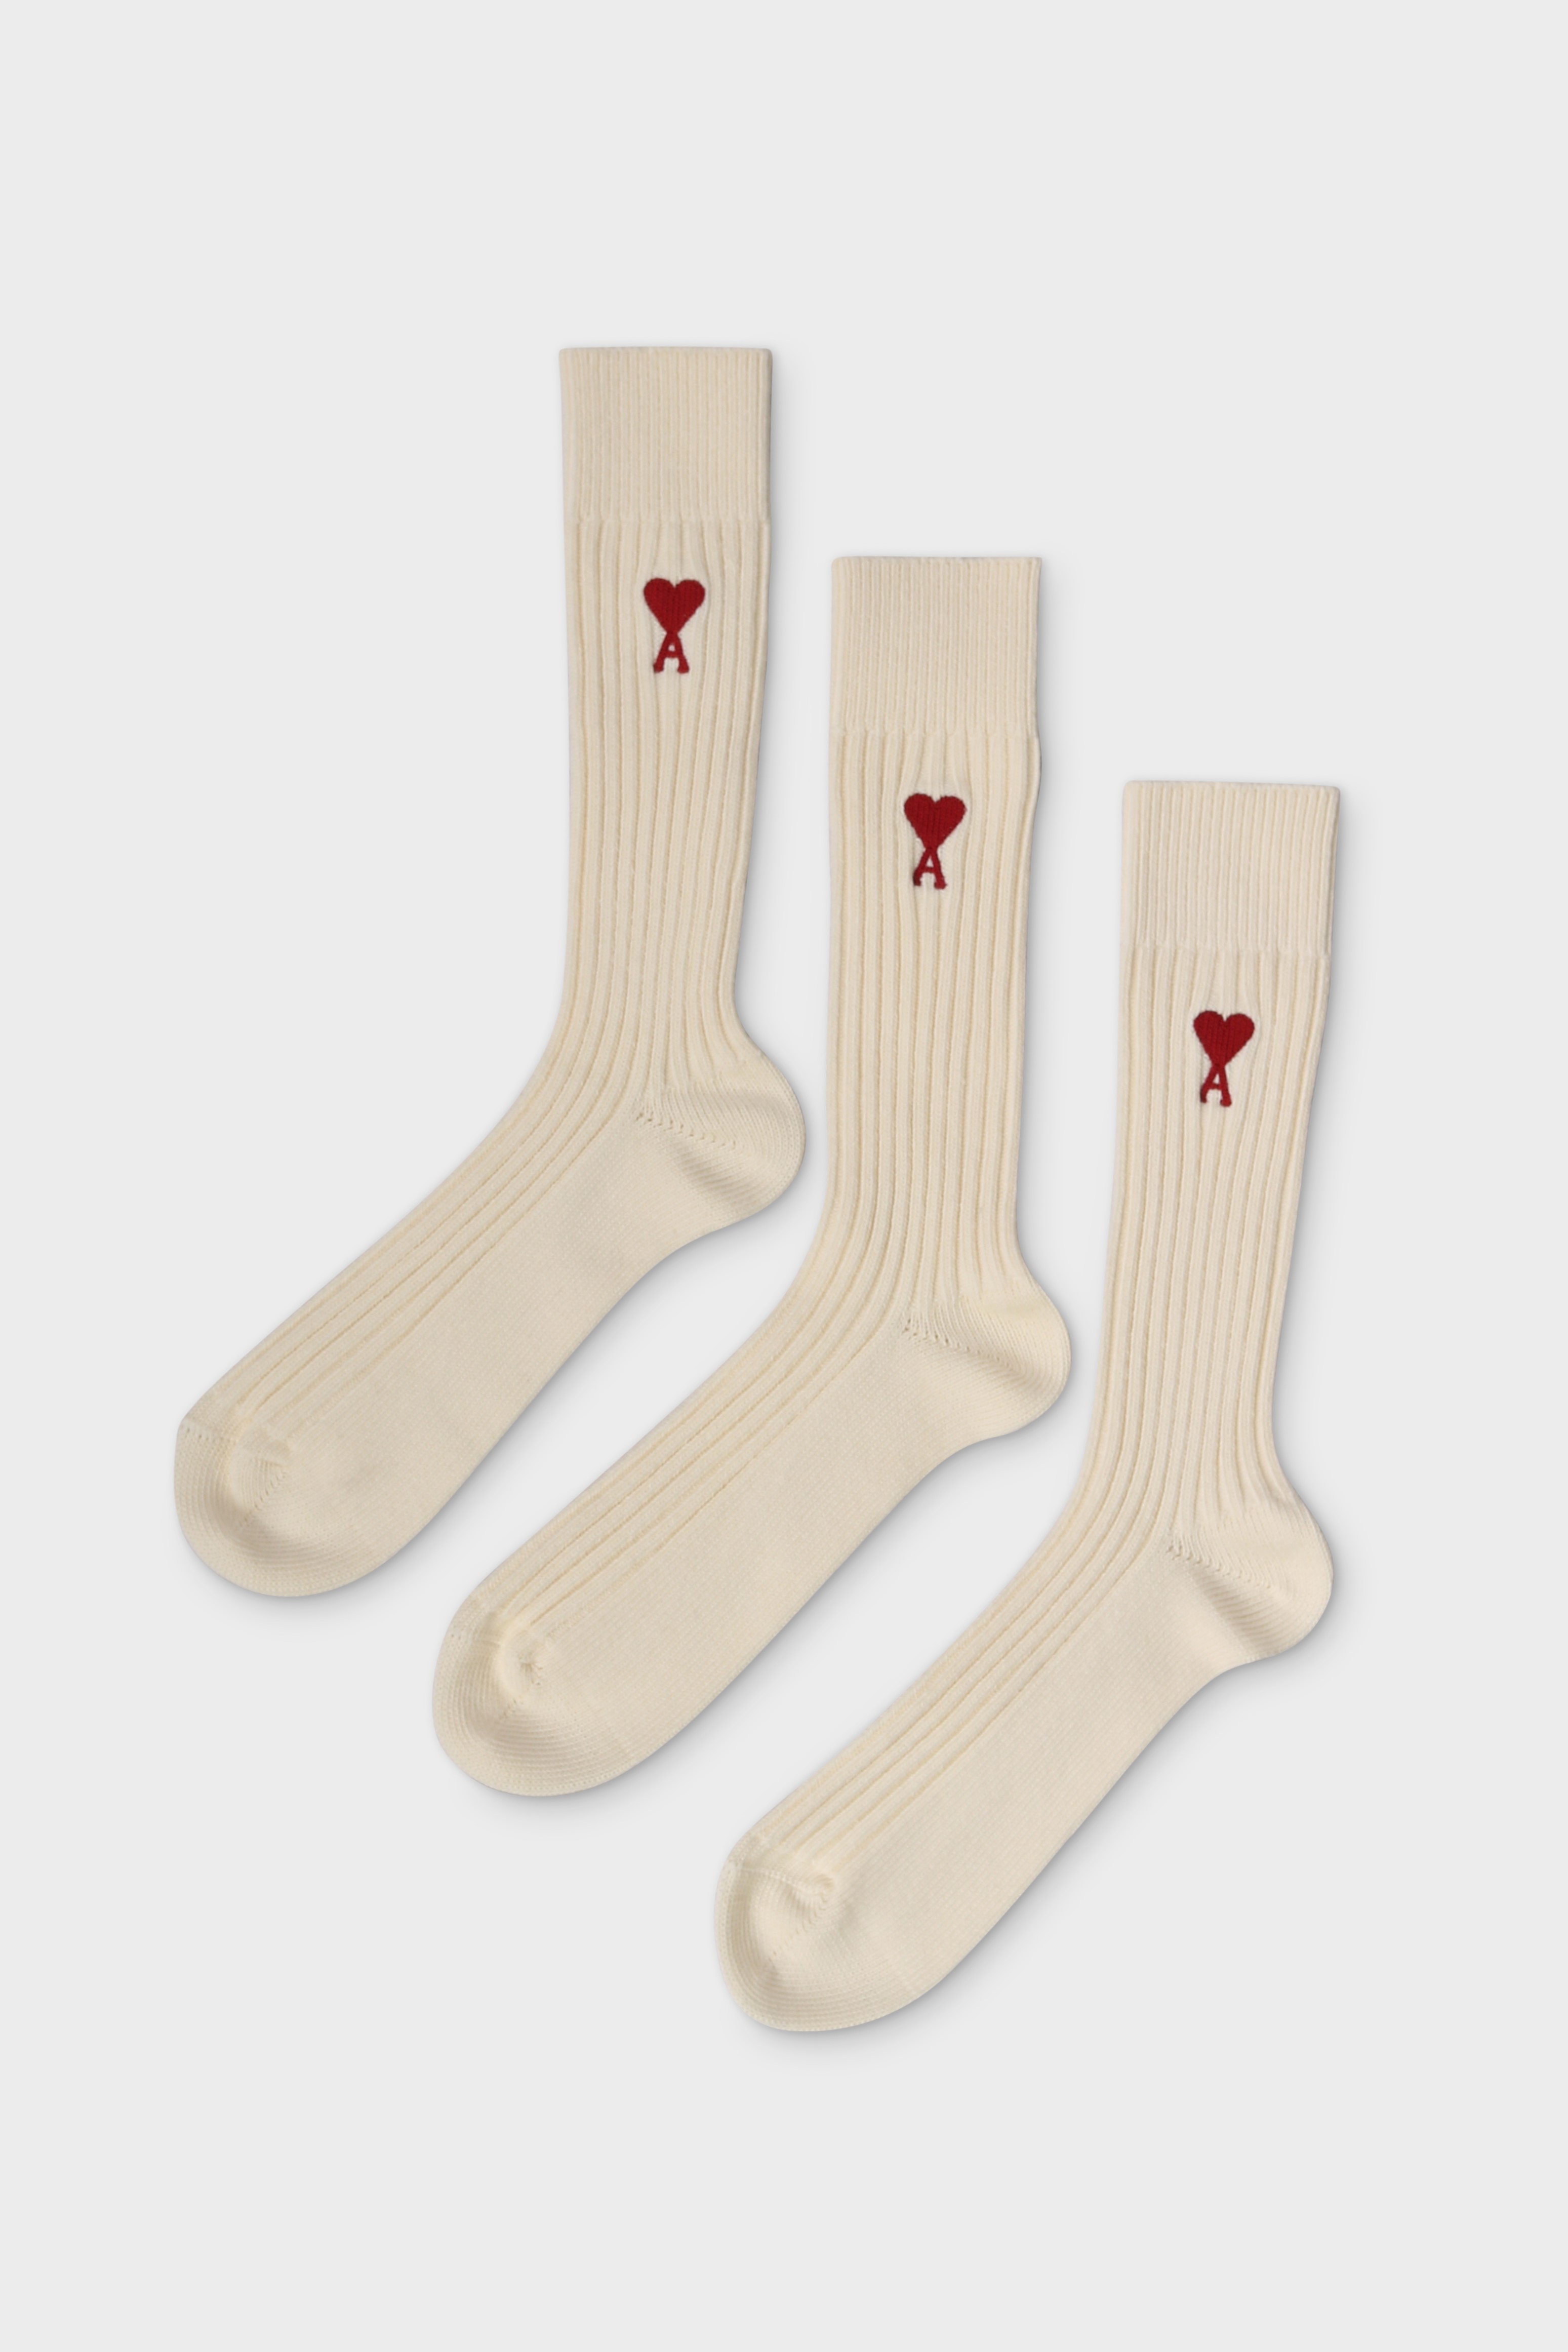 AMI PARIS de Coeur 3 Pack Socks in Off White 39-42